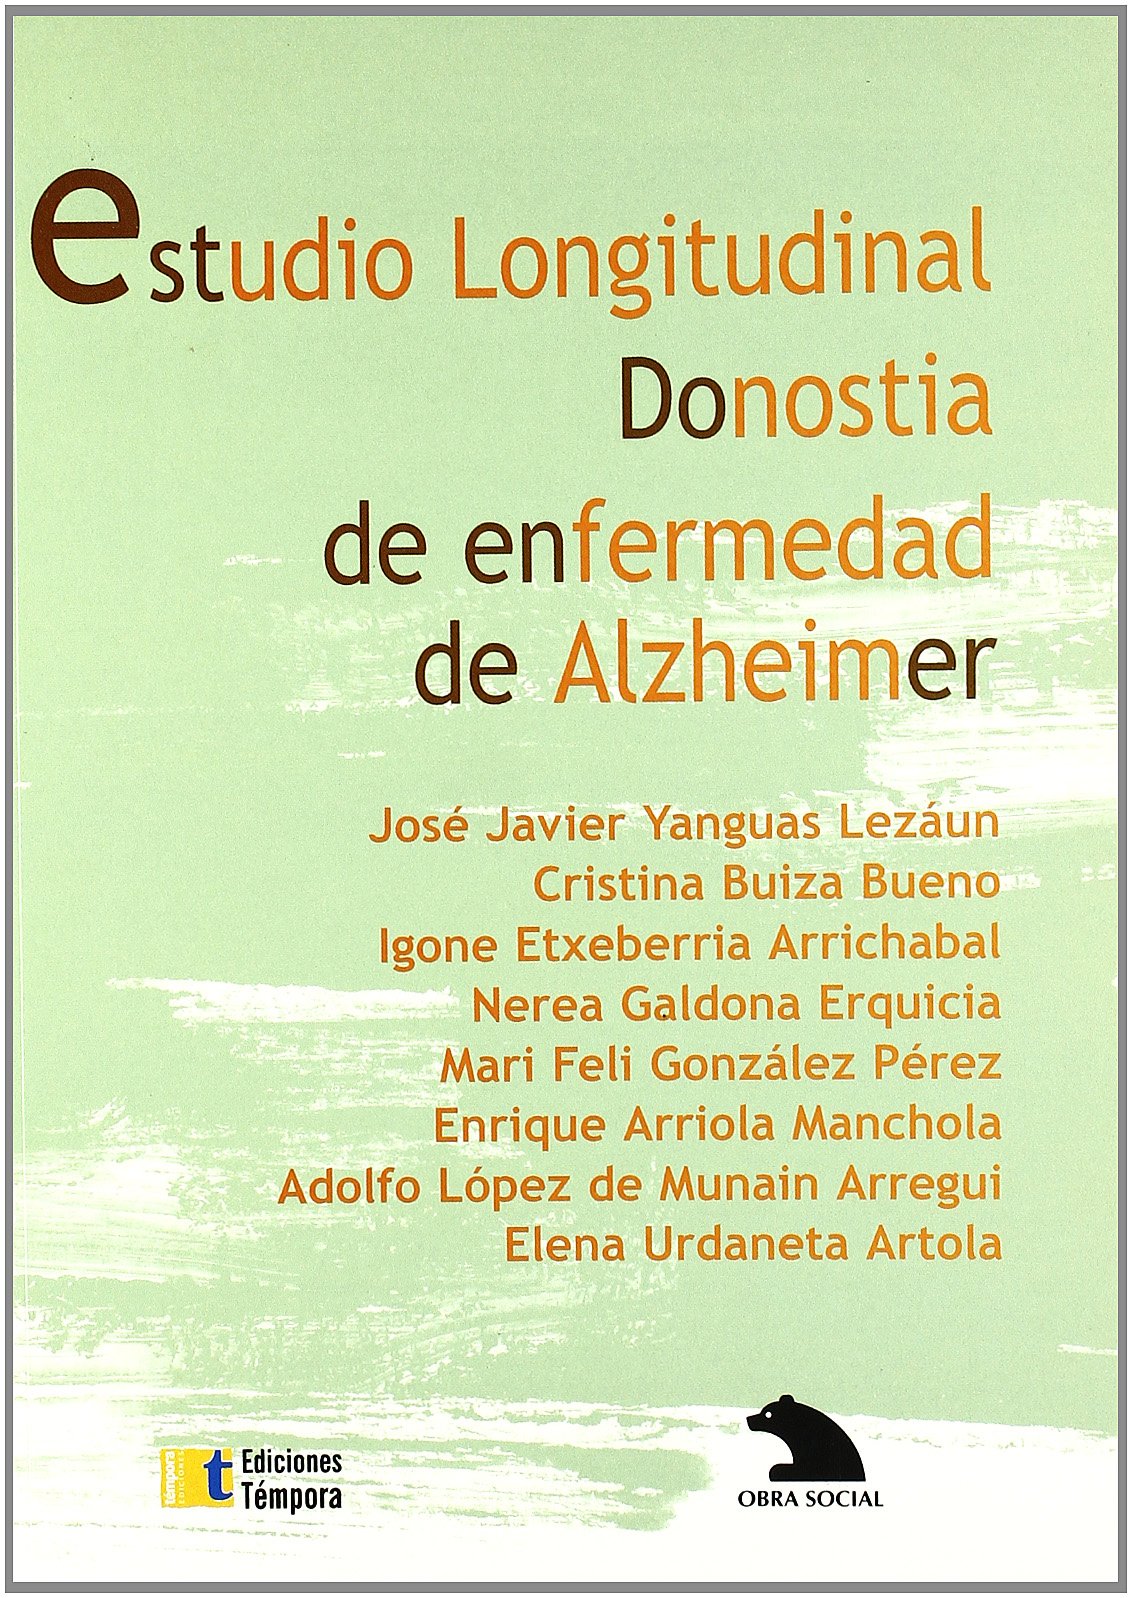 Imagen de portada del libro Estudio longitudinal Donostia de enfermedad de Alzheimer